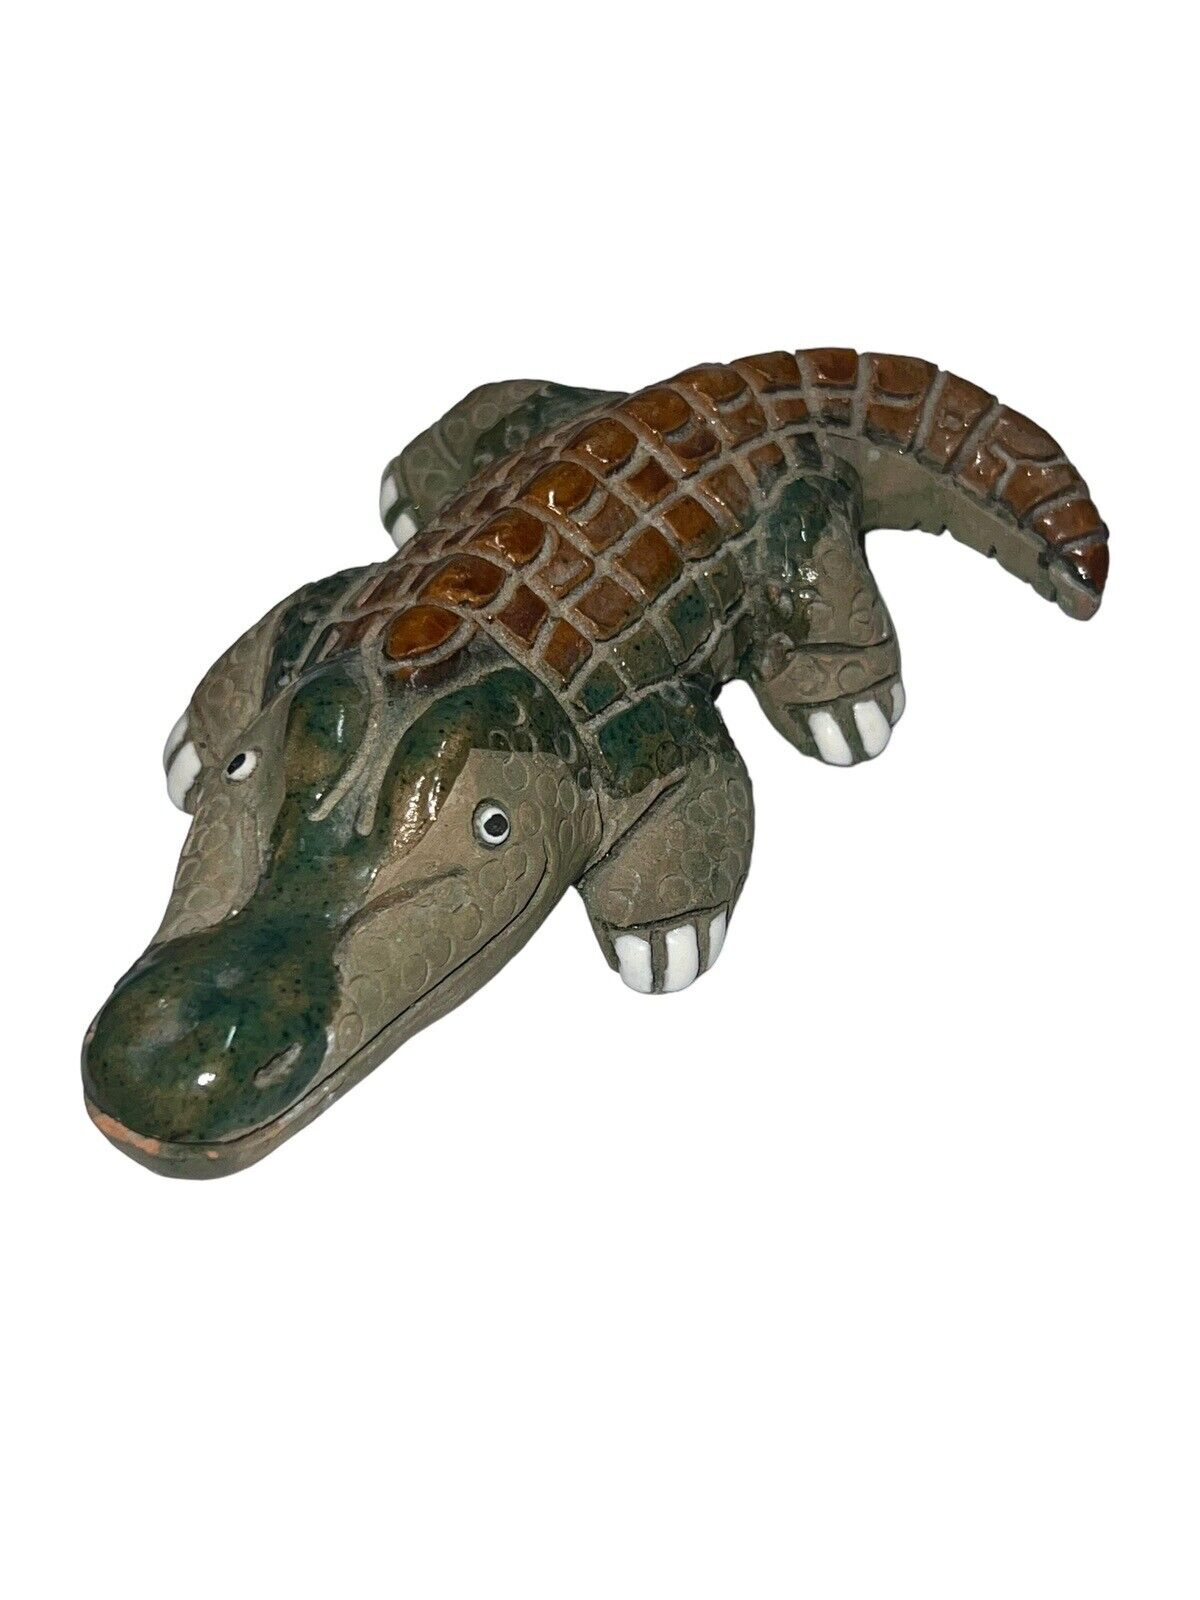 Vintage Casals of Peru Ceramic Alligator Very Detailed Alligator